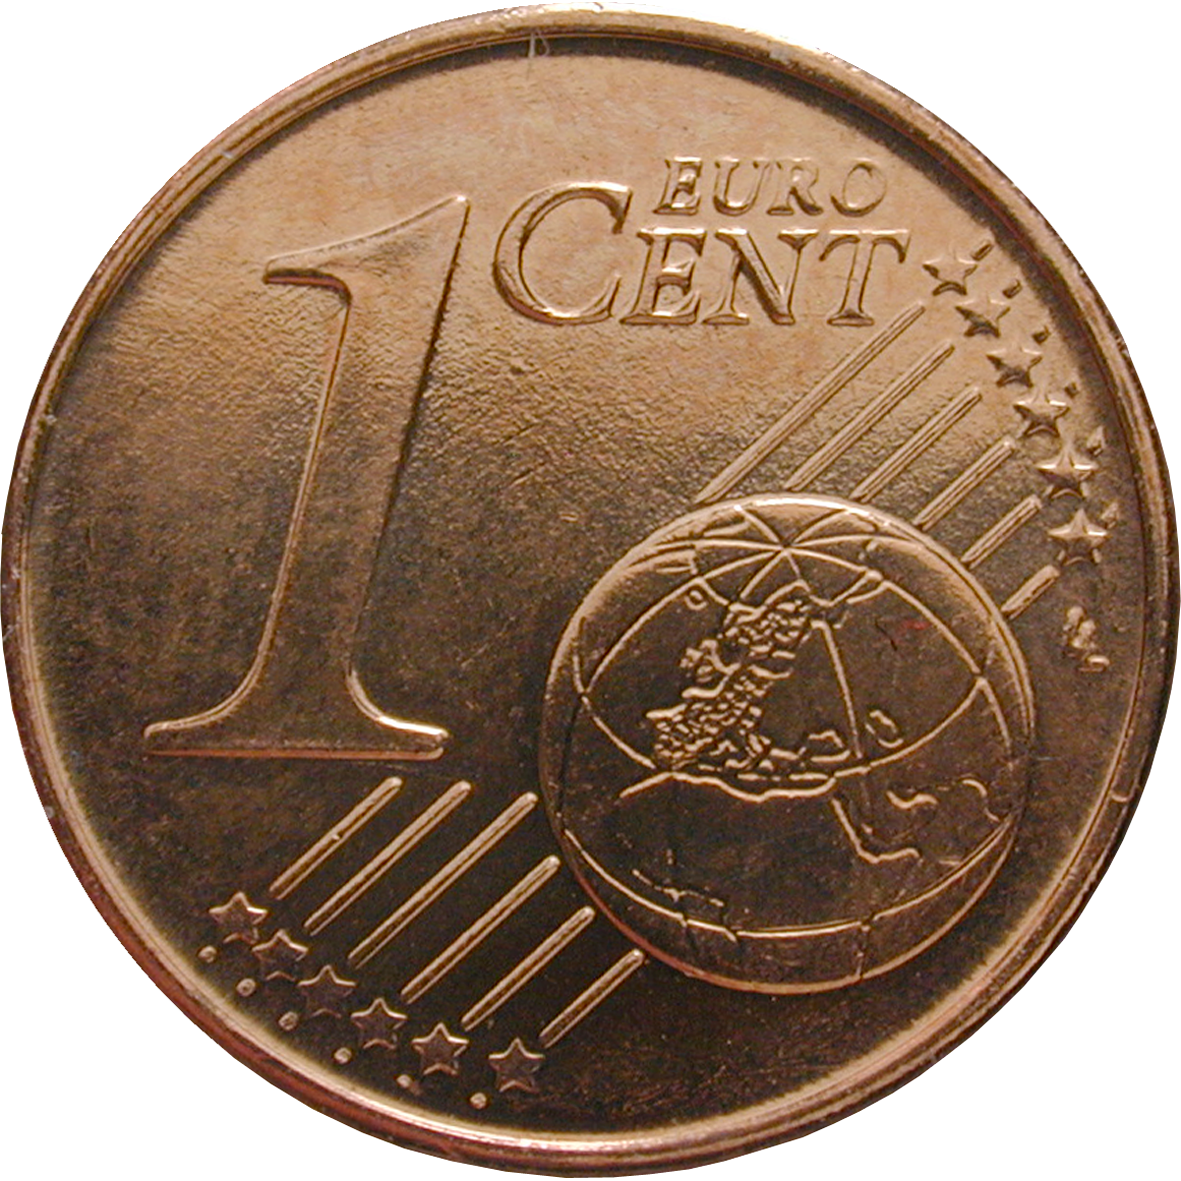 Republik Griechenland, 1 Eurocent 2002 (obverse)